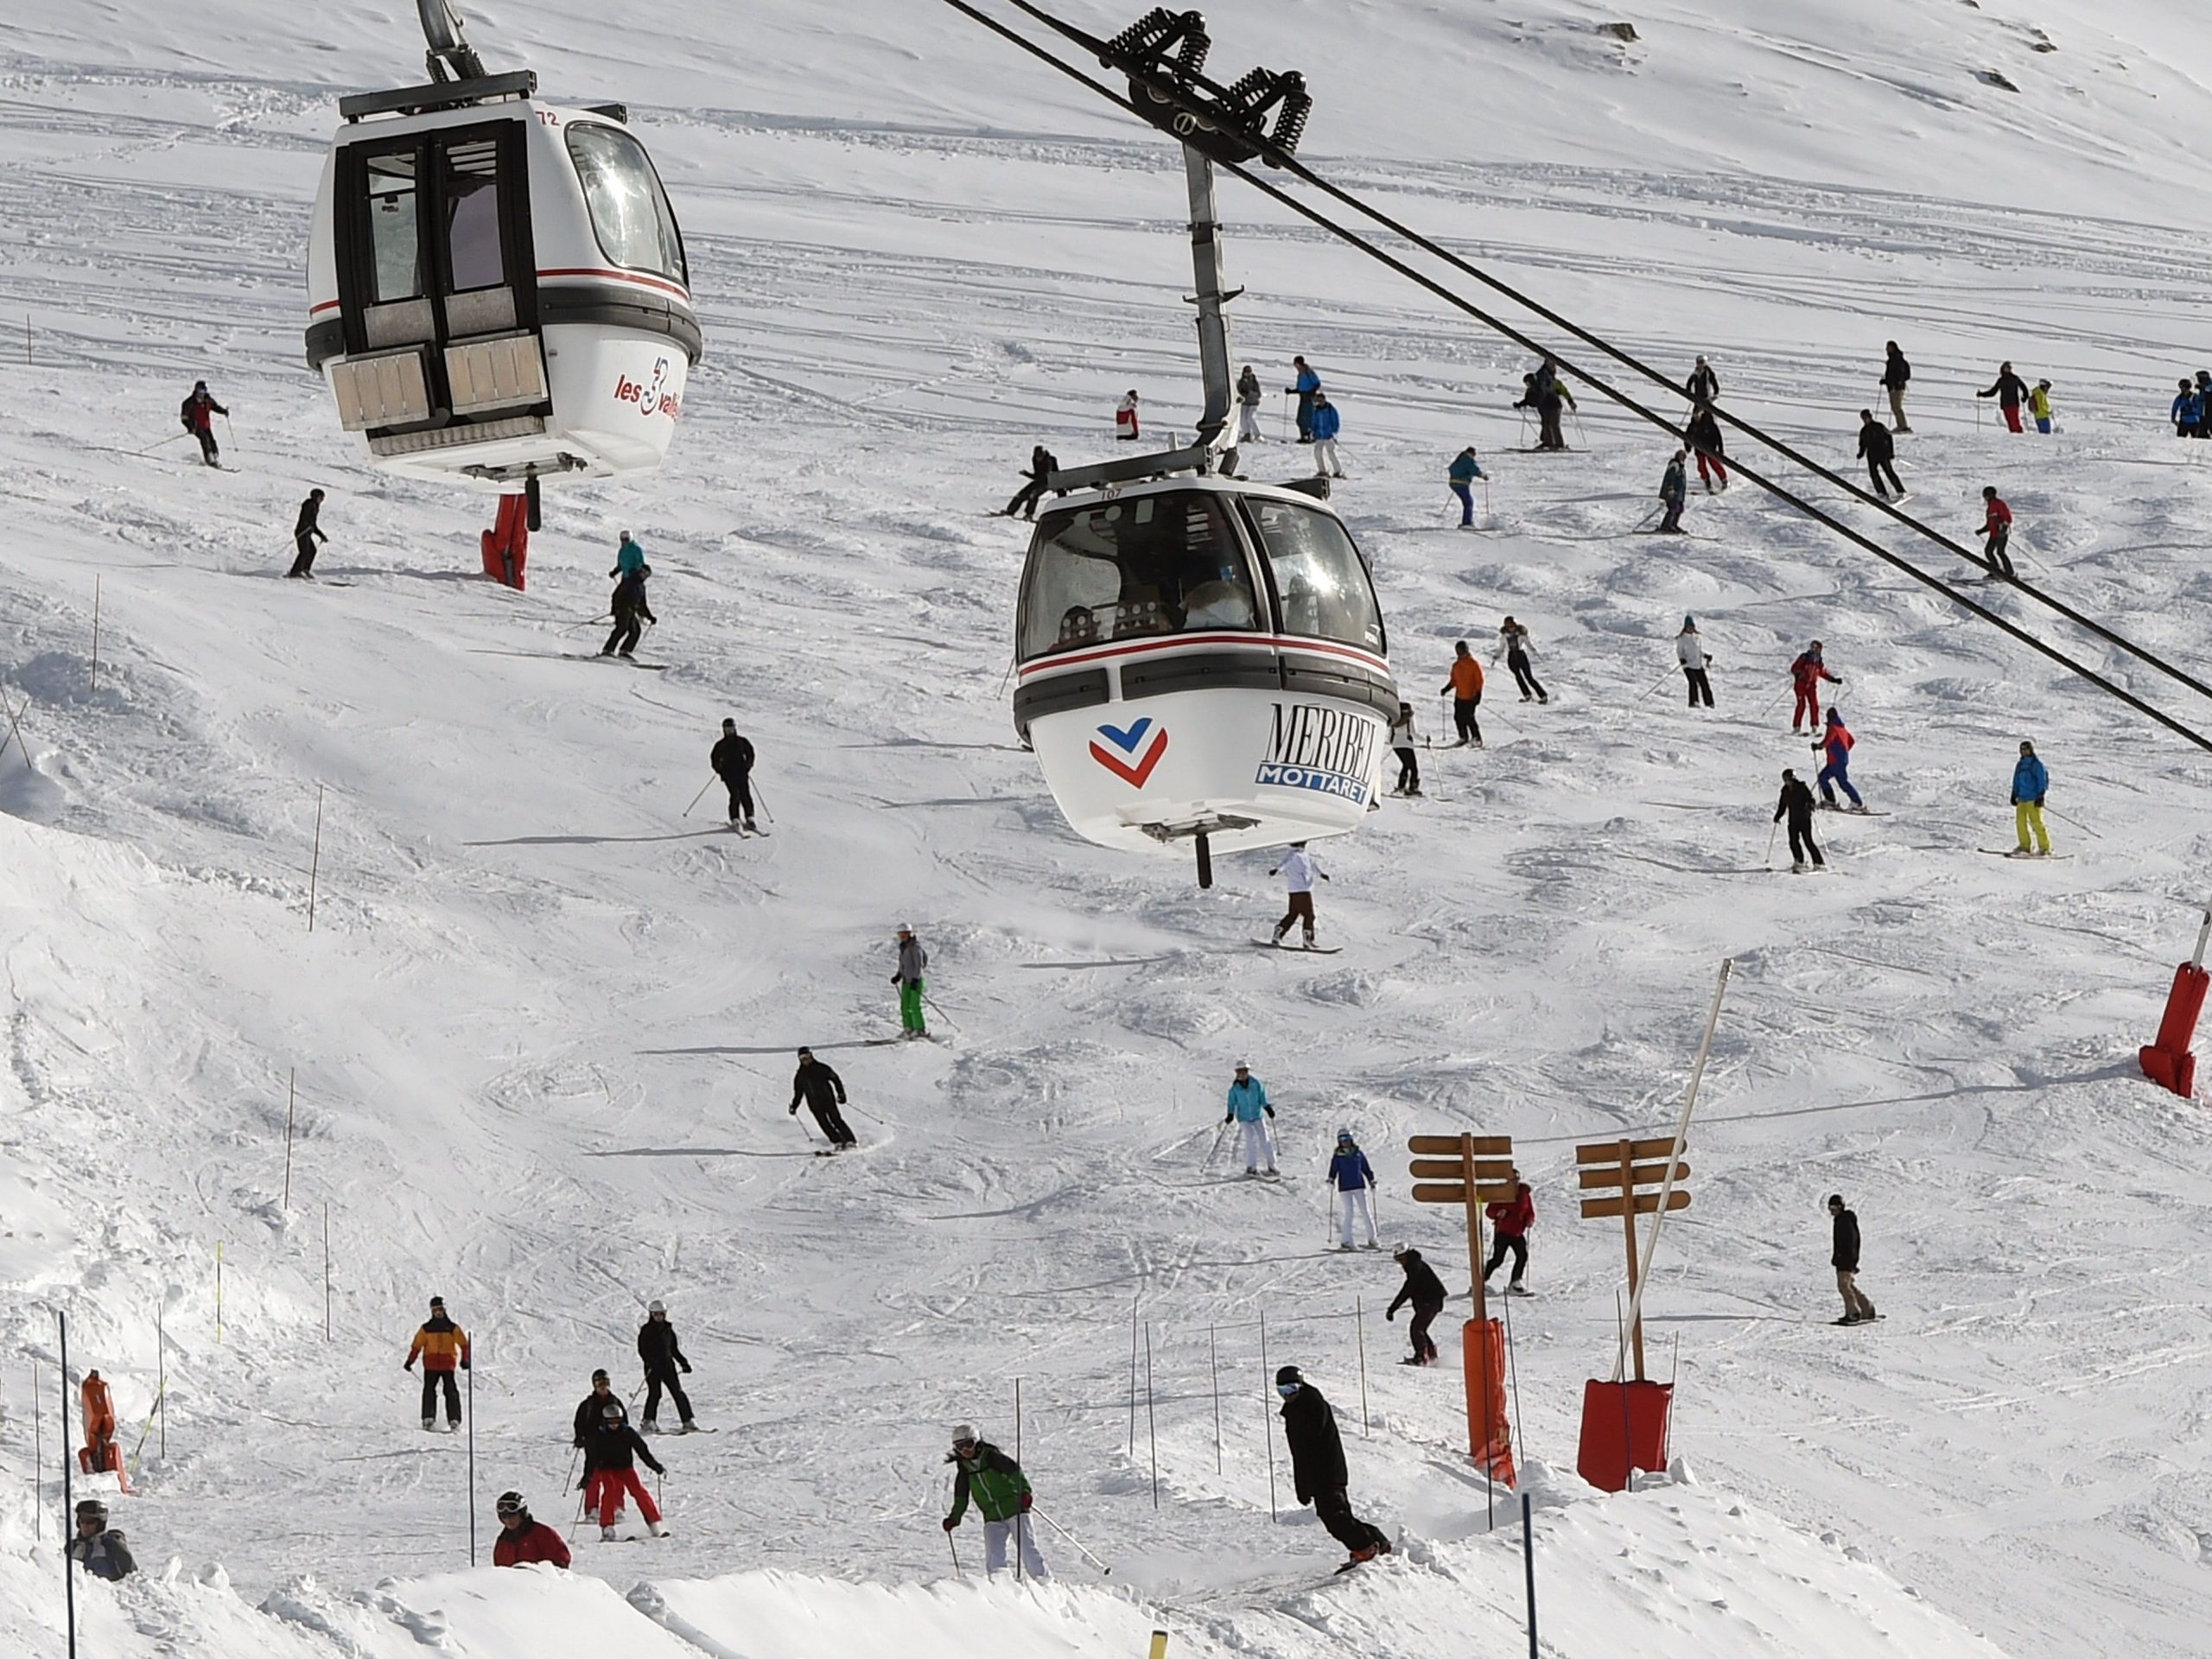 The French ski resort of Meribel